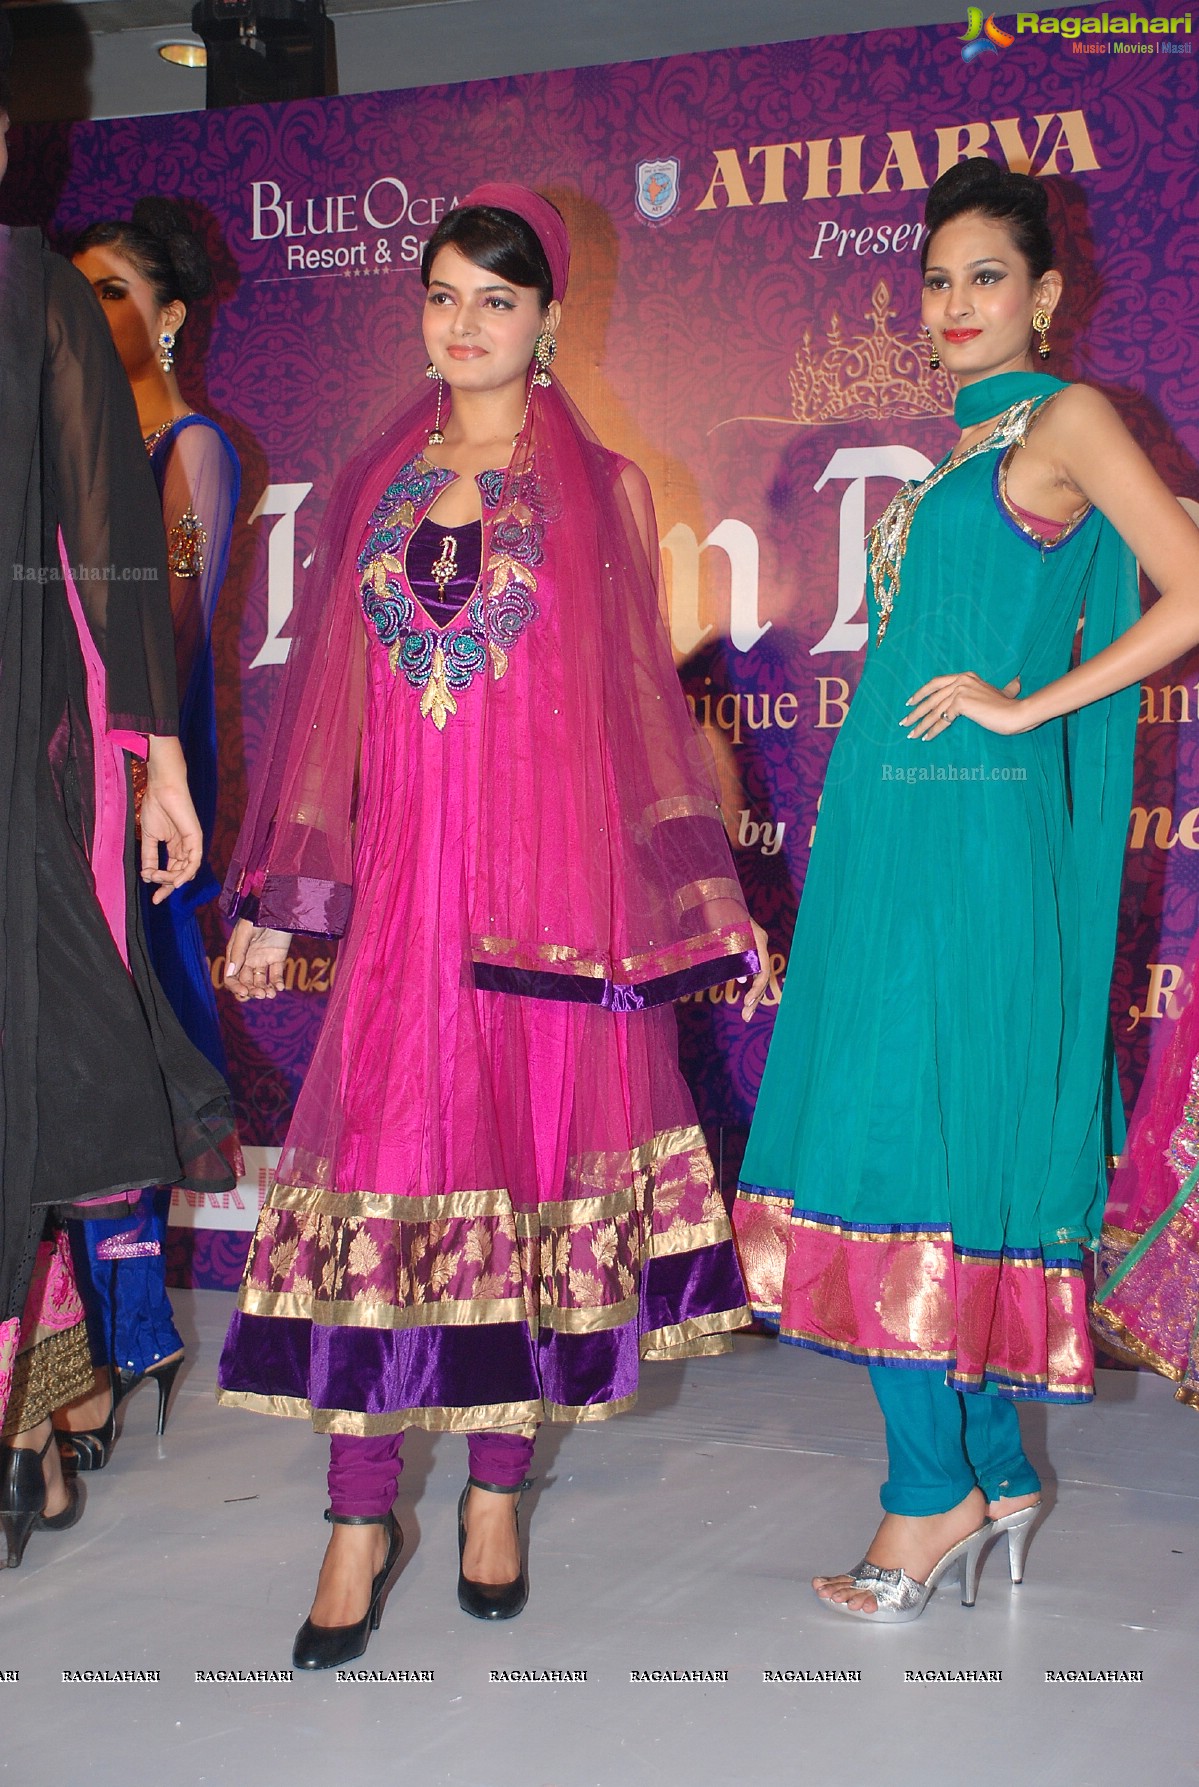 Indian Princess 2012 Auditions